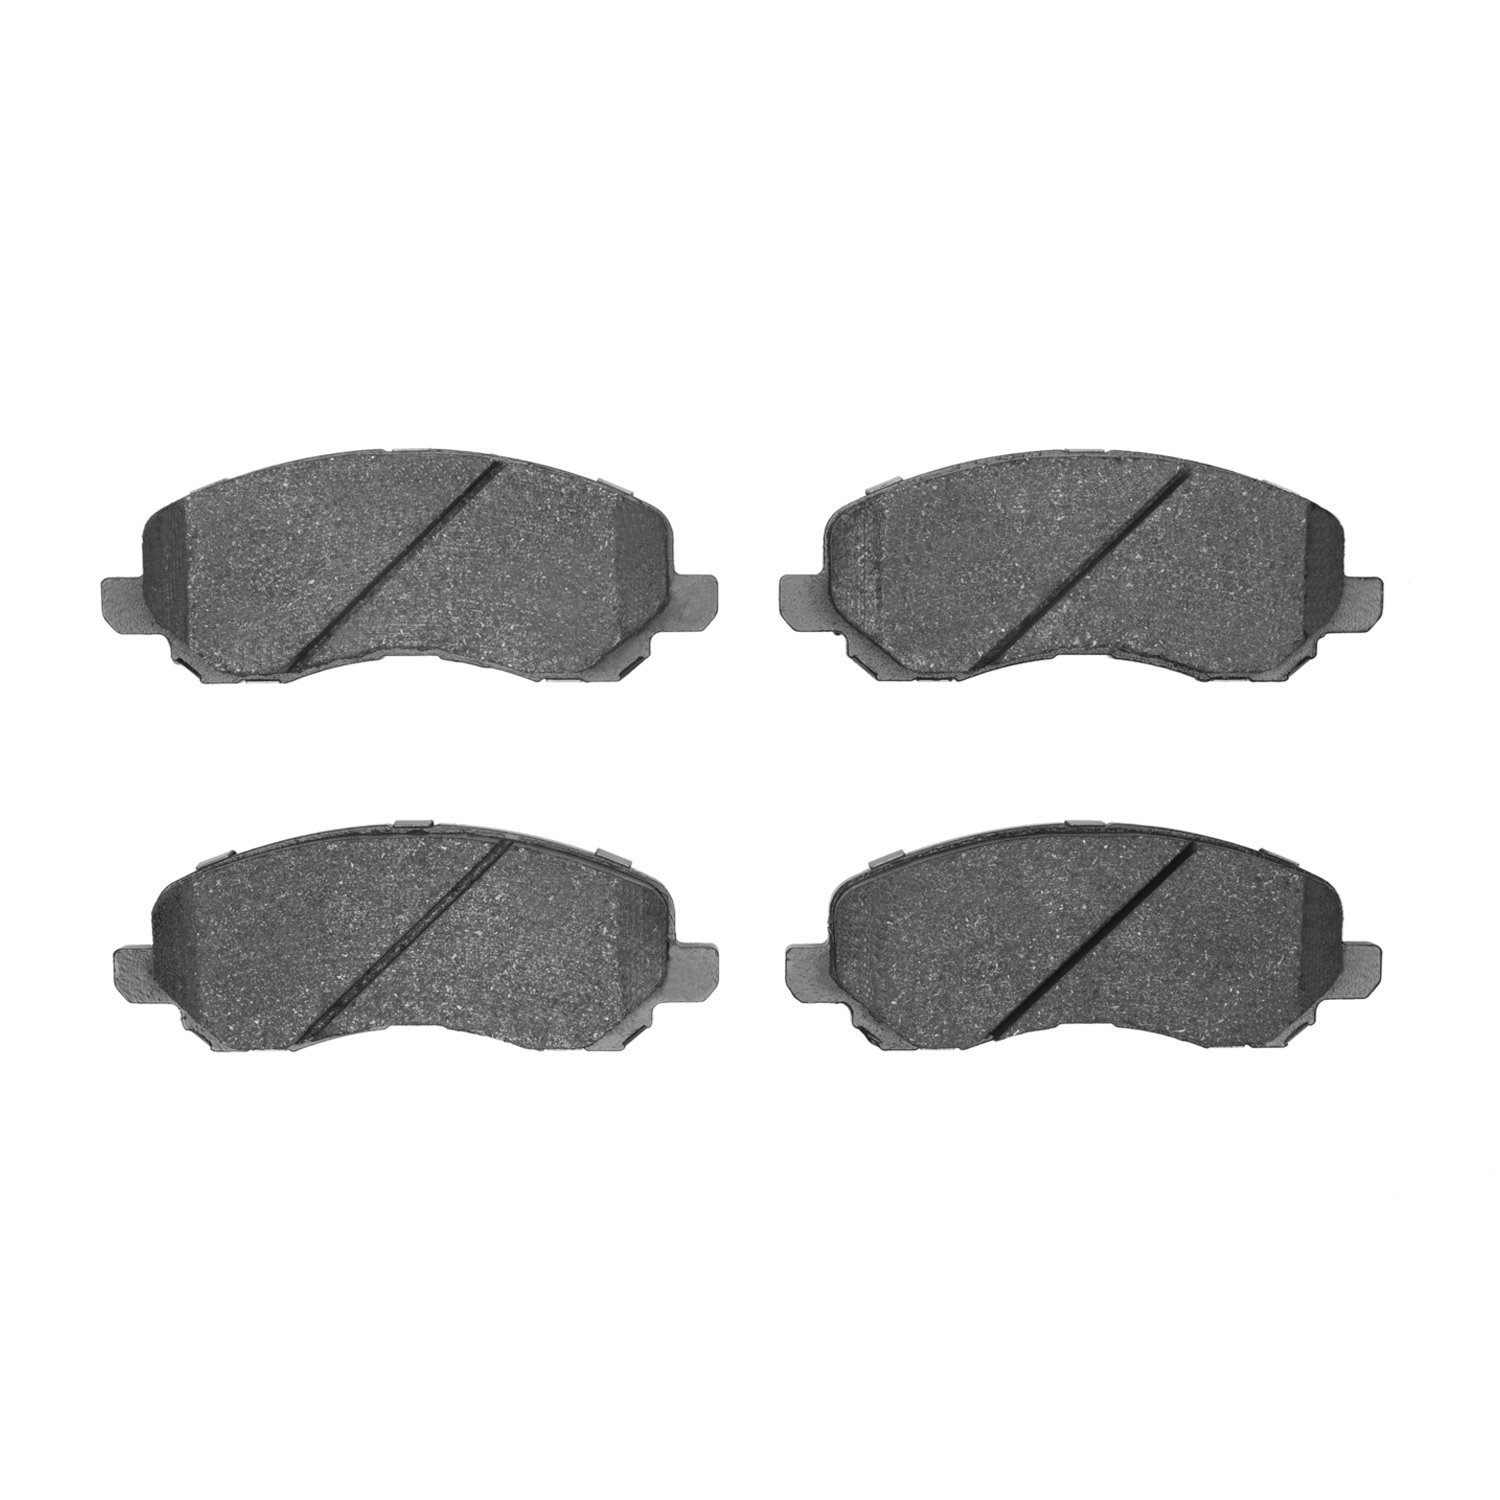 Track/Street Brake Pads, Fits Select Fits Multiple Makes/Models, Position: Front